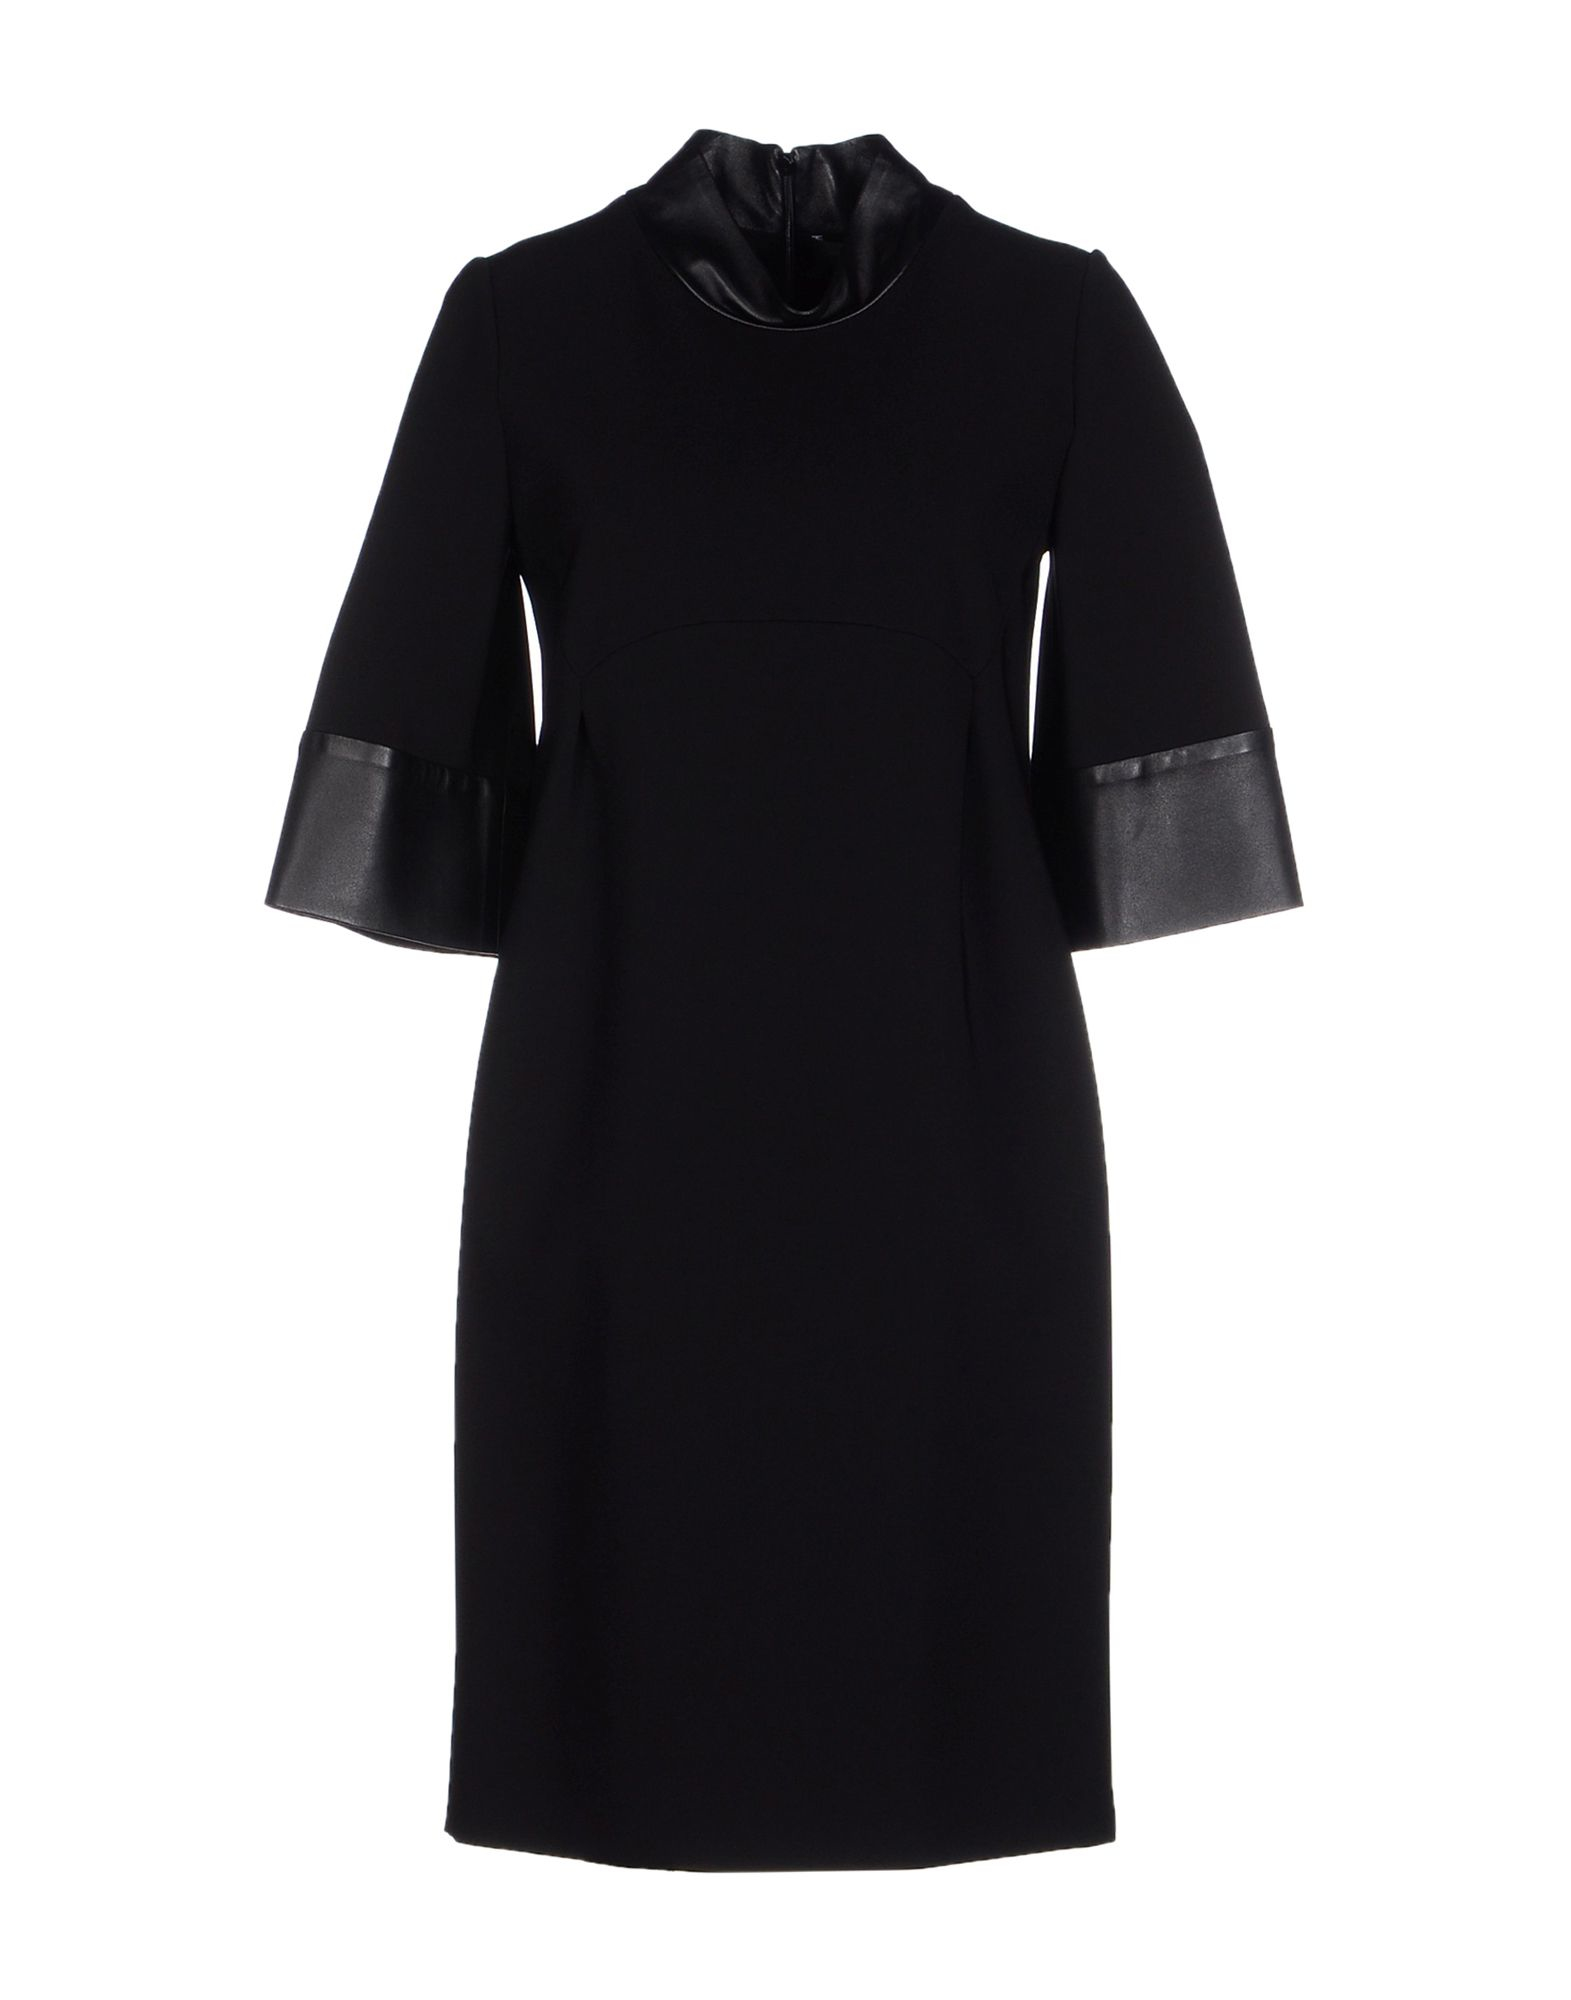 Lyst - Gucci Short Dress in Black